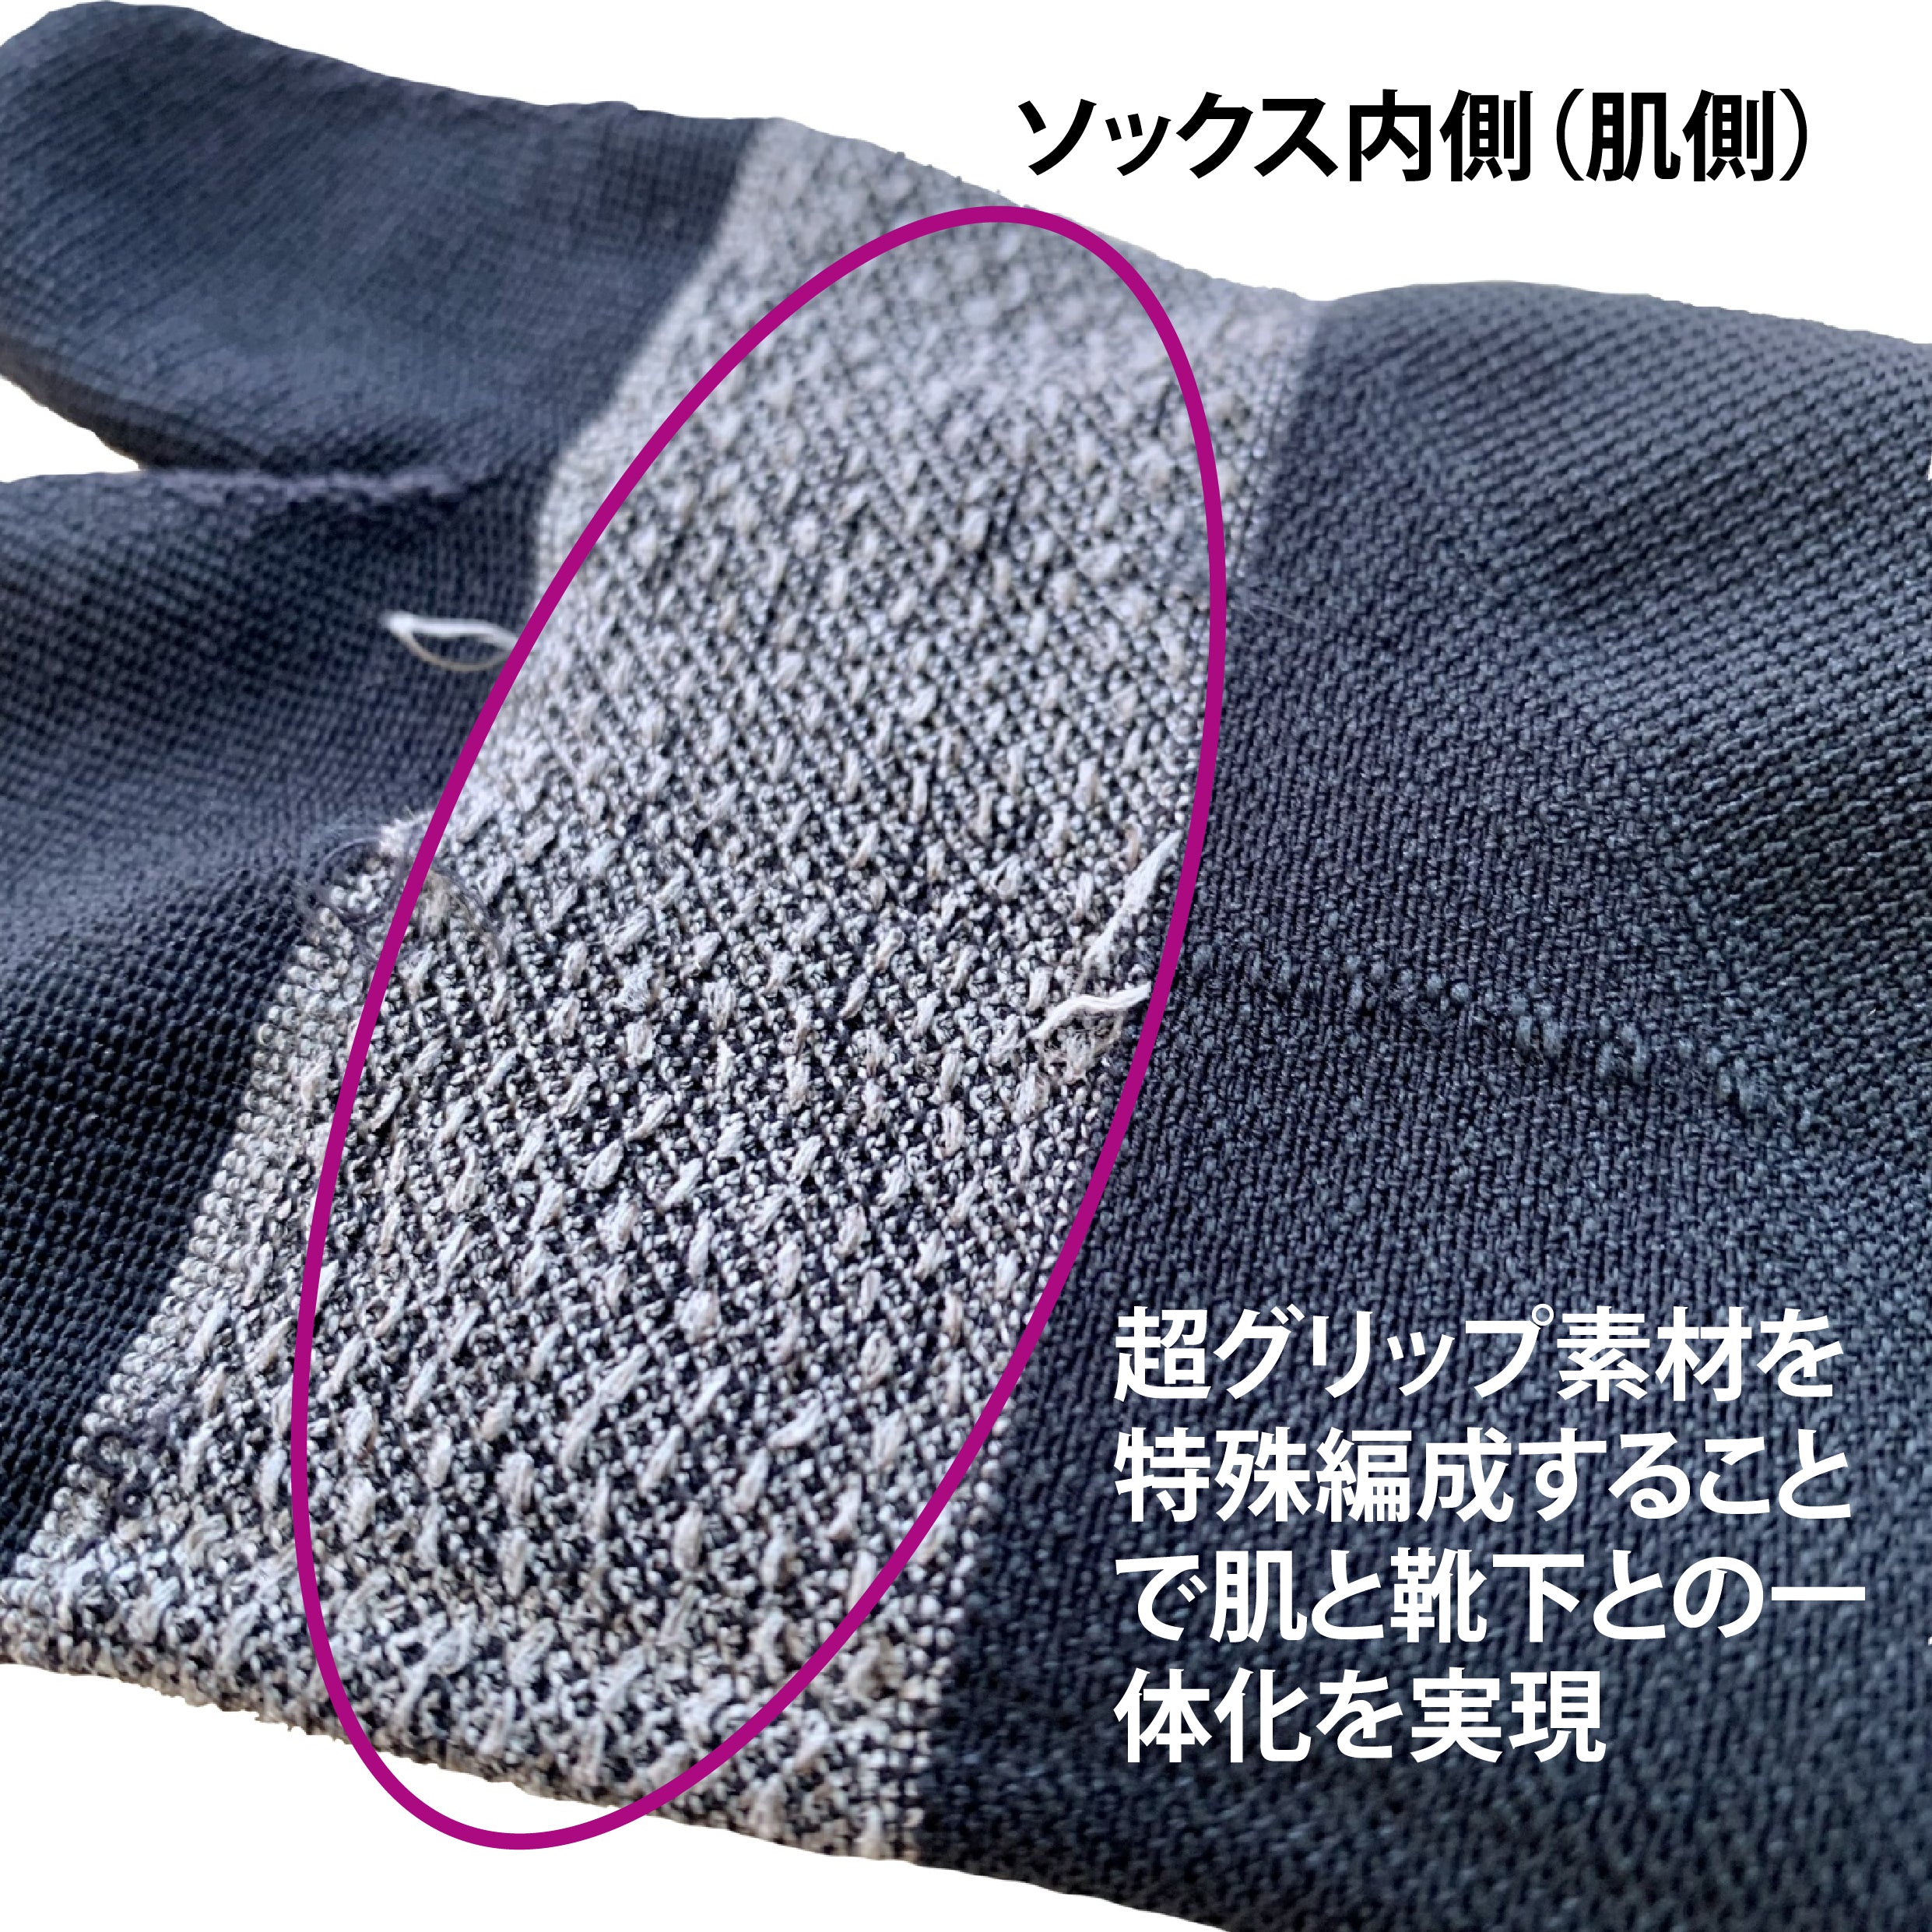 ADLER × OLENO Original Functional Socks